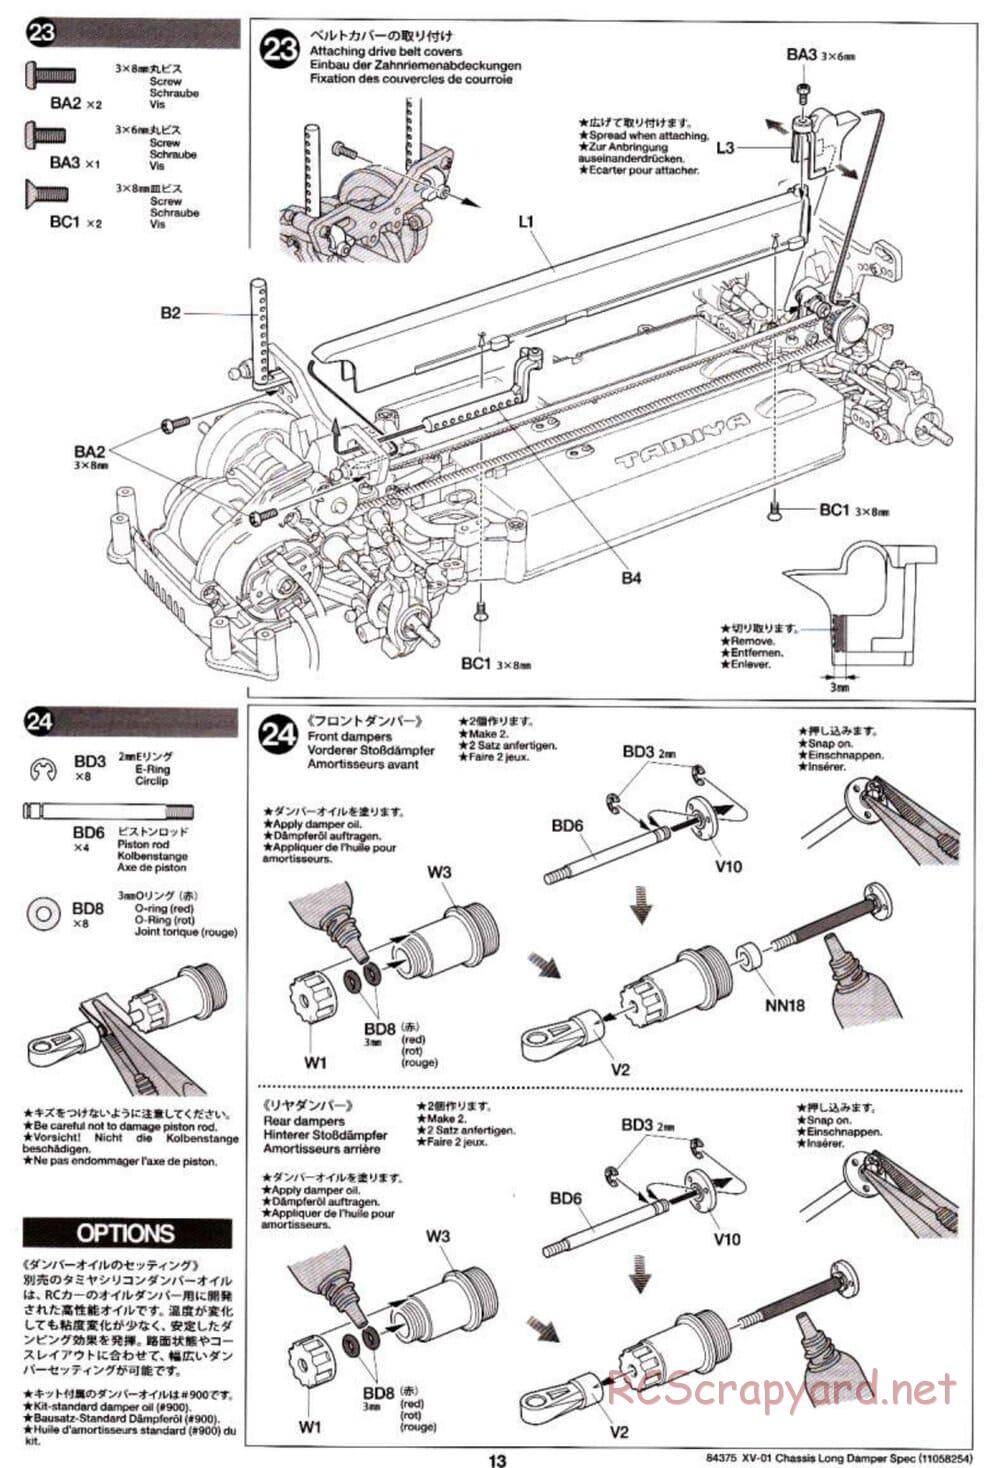 Tamiya - XV-01 Long Damper Spec Chassis - Manual - Page 13